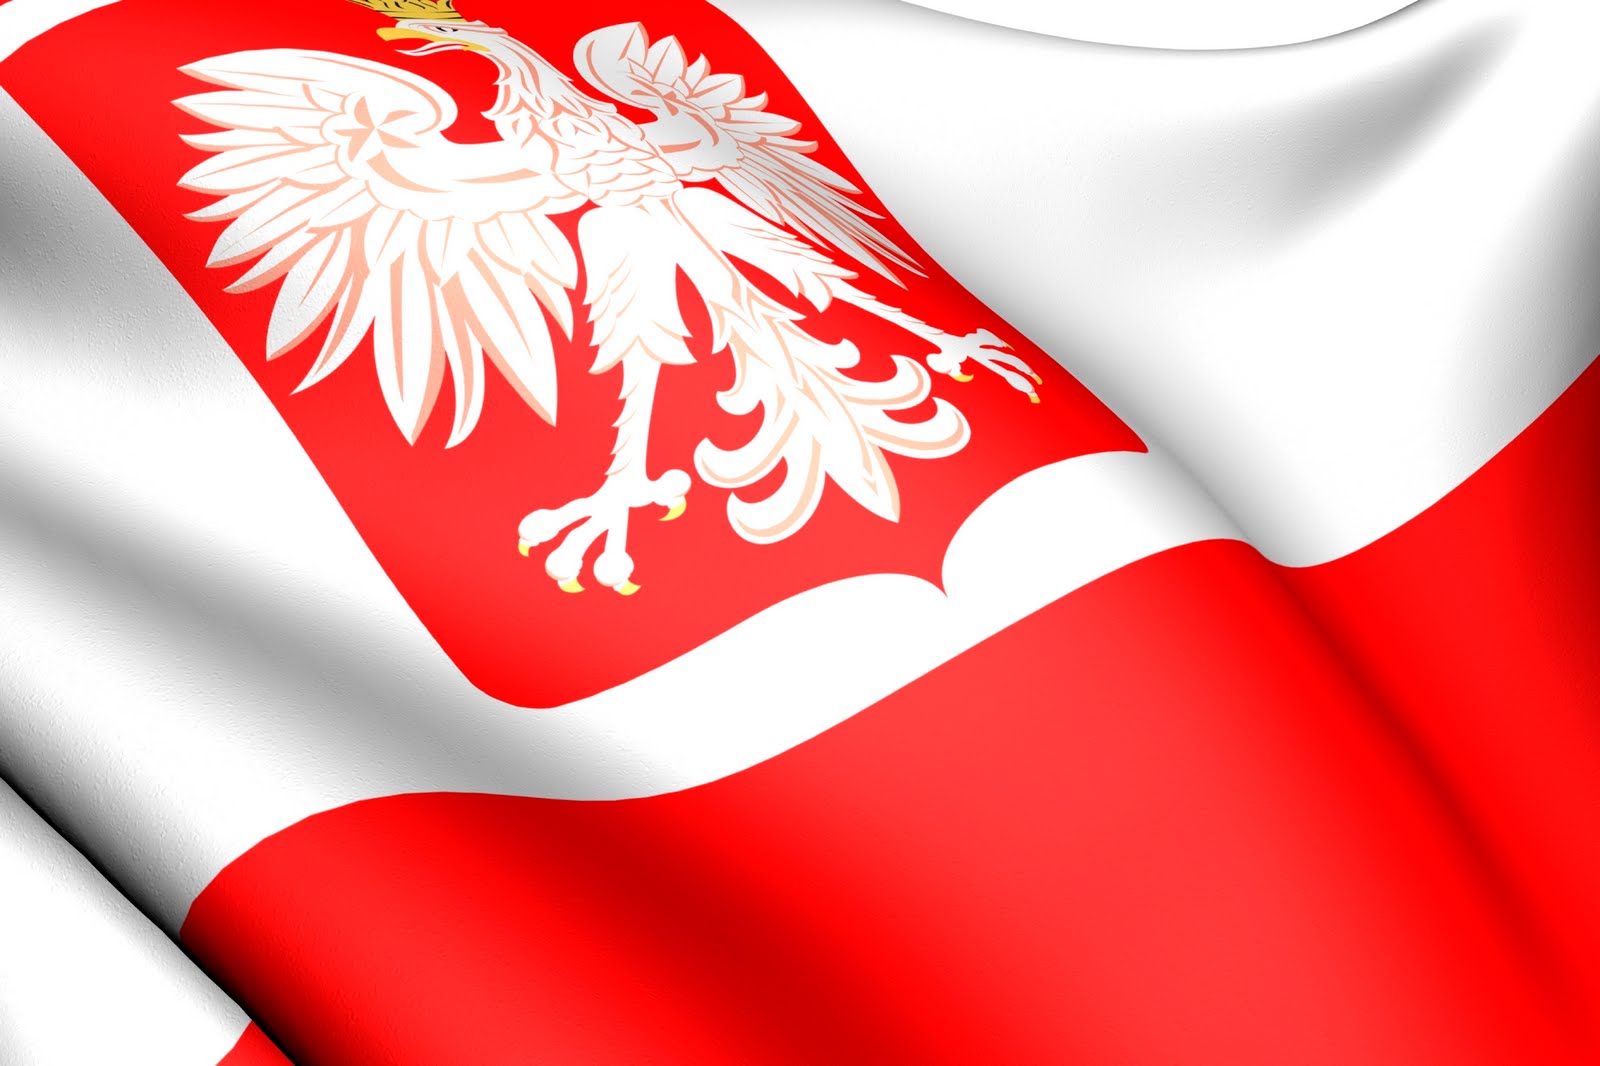 Polish Tax Authority